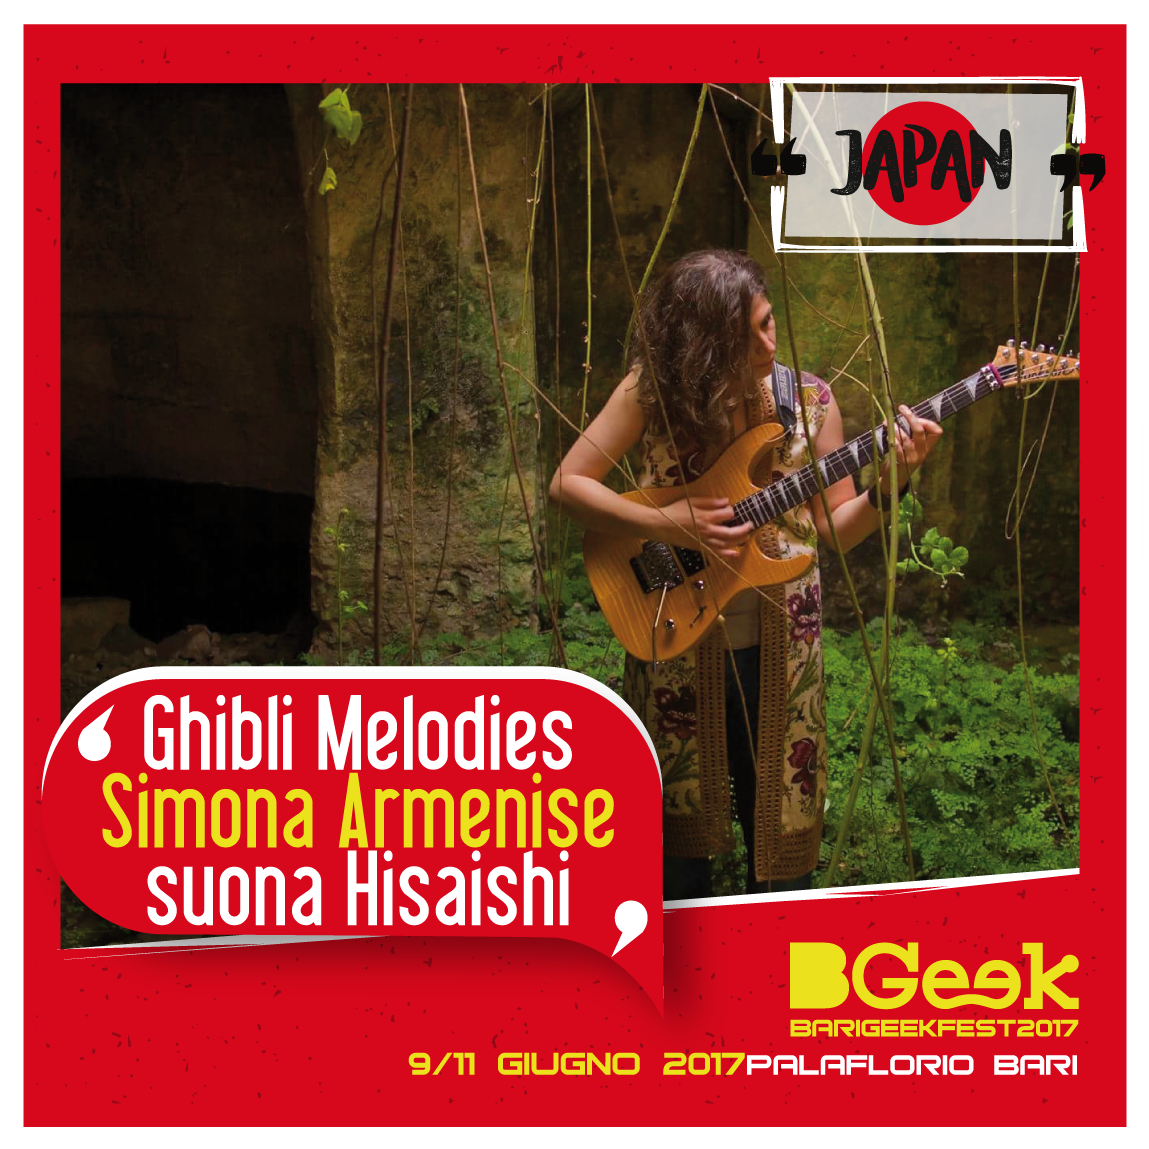 Mondo Japan: Ghibli Melodies – Simona Armenise suona Hisaishi